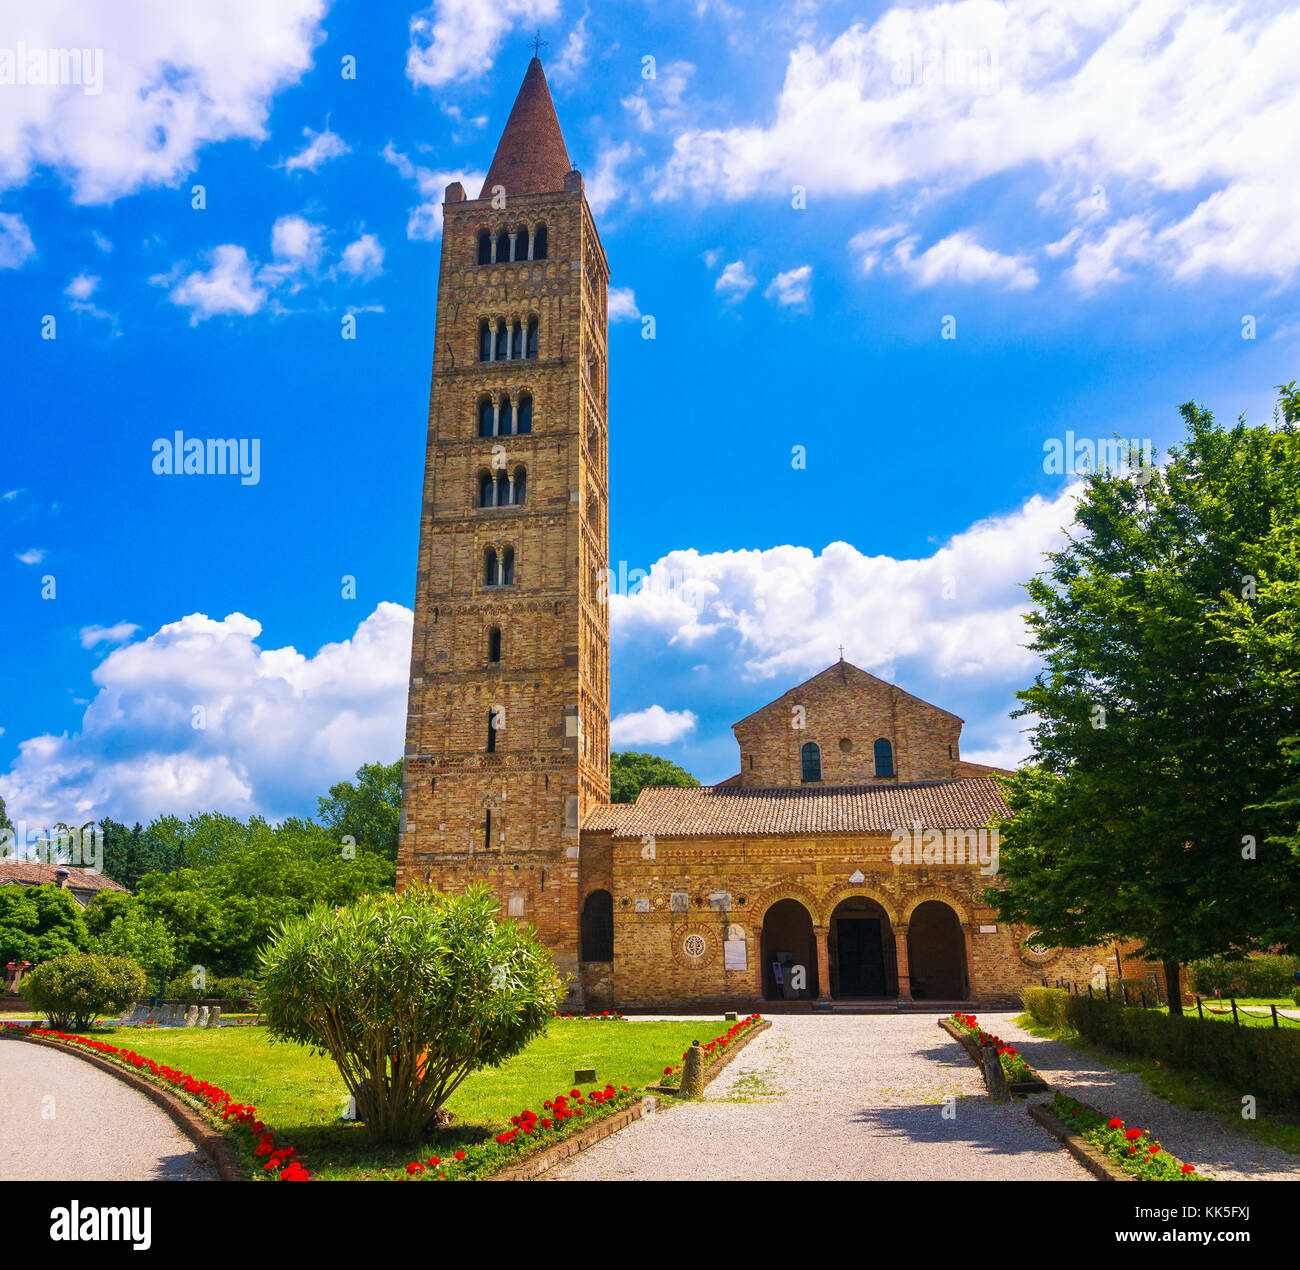 Abtei von Pomposa, Benediktinerkloster mittelalterliche Kirche und Campanile Tower. comacchio Ferrara, Emilia Romagna, Italien Europa. Stockfoto